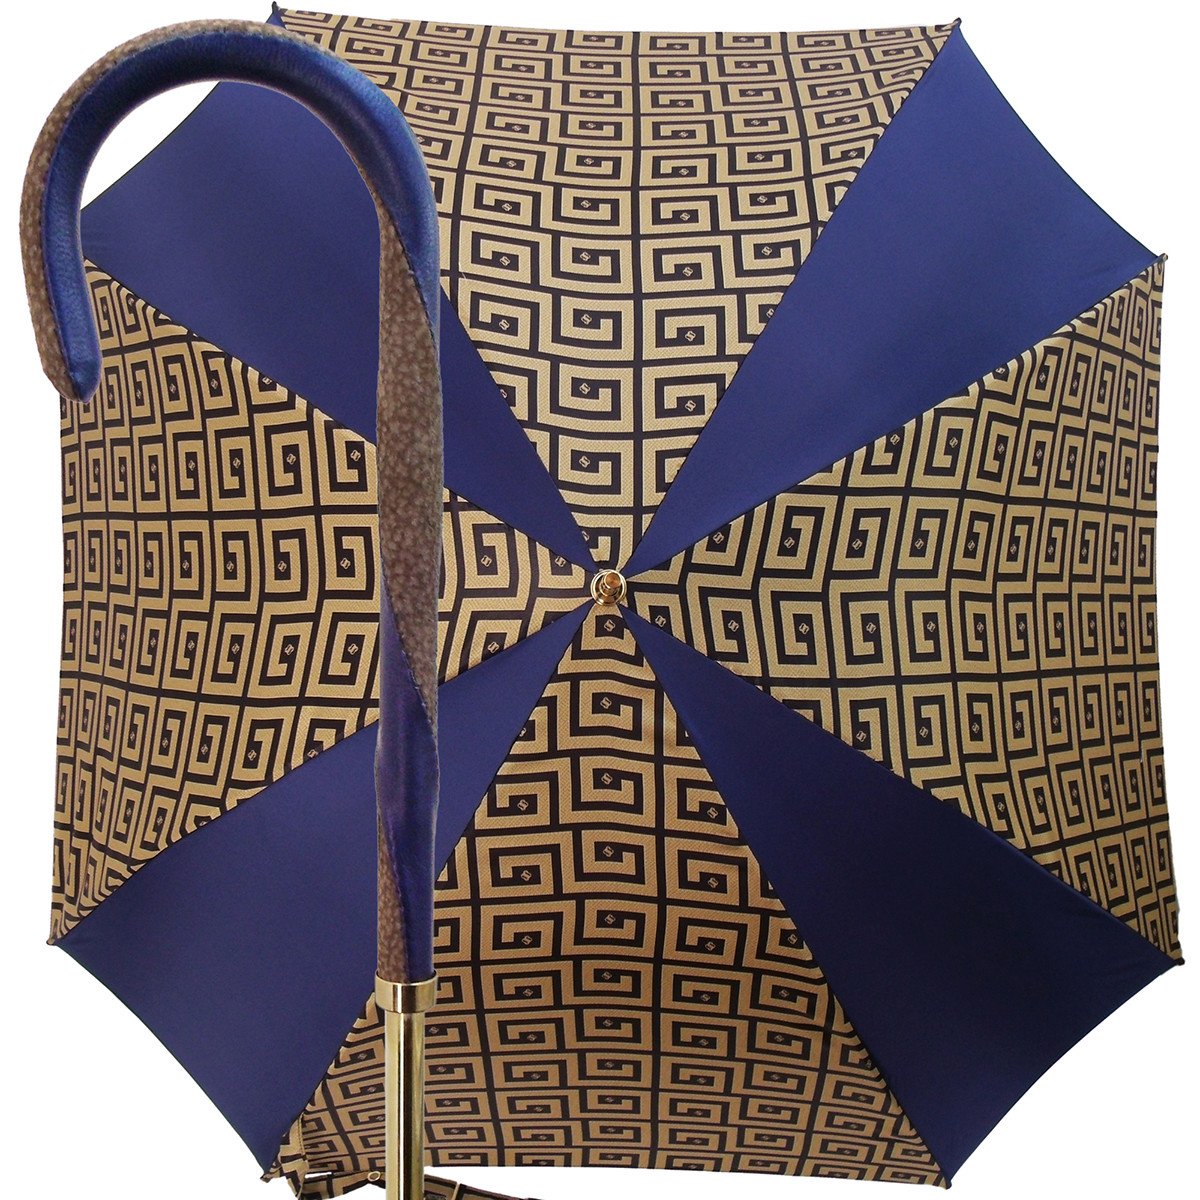 Original Handcrafted Umbrella with golden Greek design - il-marchesato